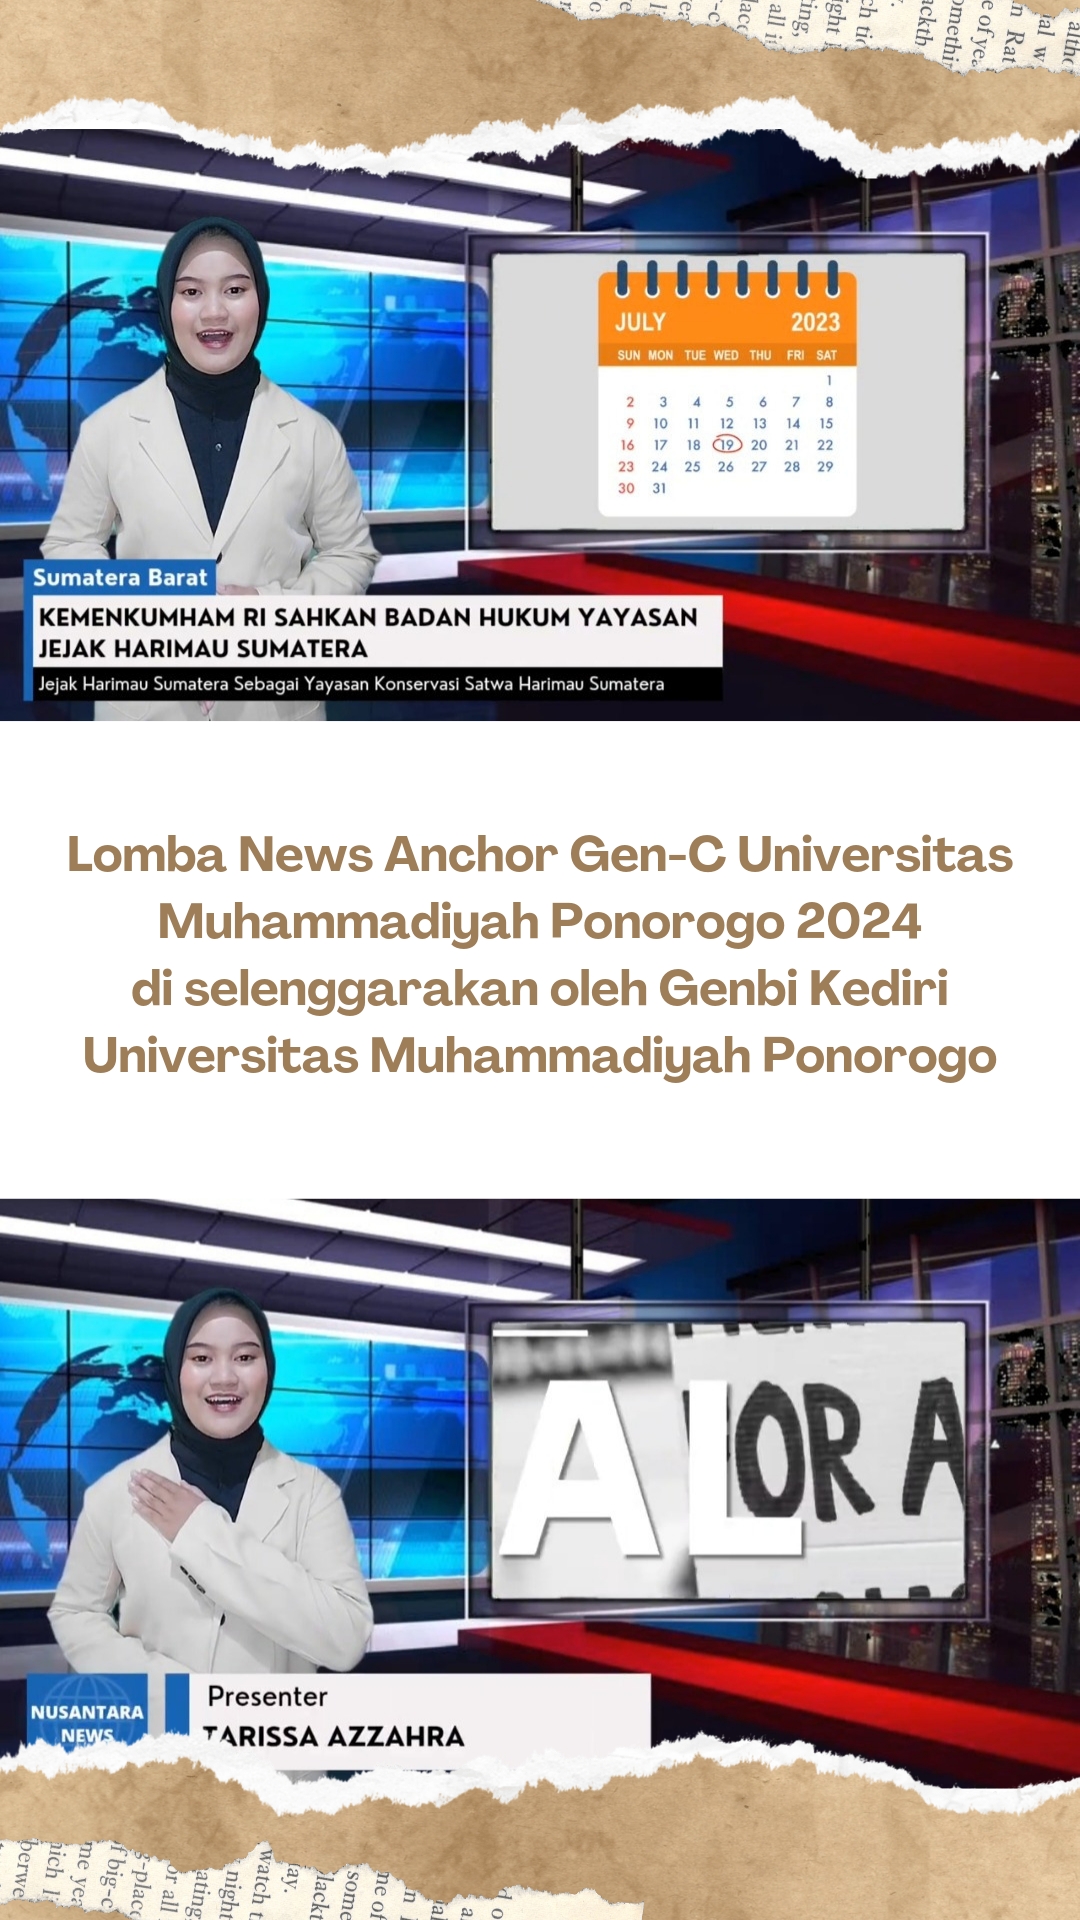 Foto Lomba News Anchor Gen-C Universitas Muhammadiyah Ponorogo 2024